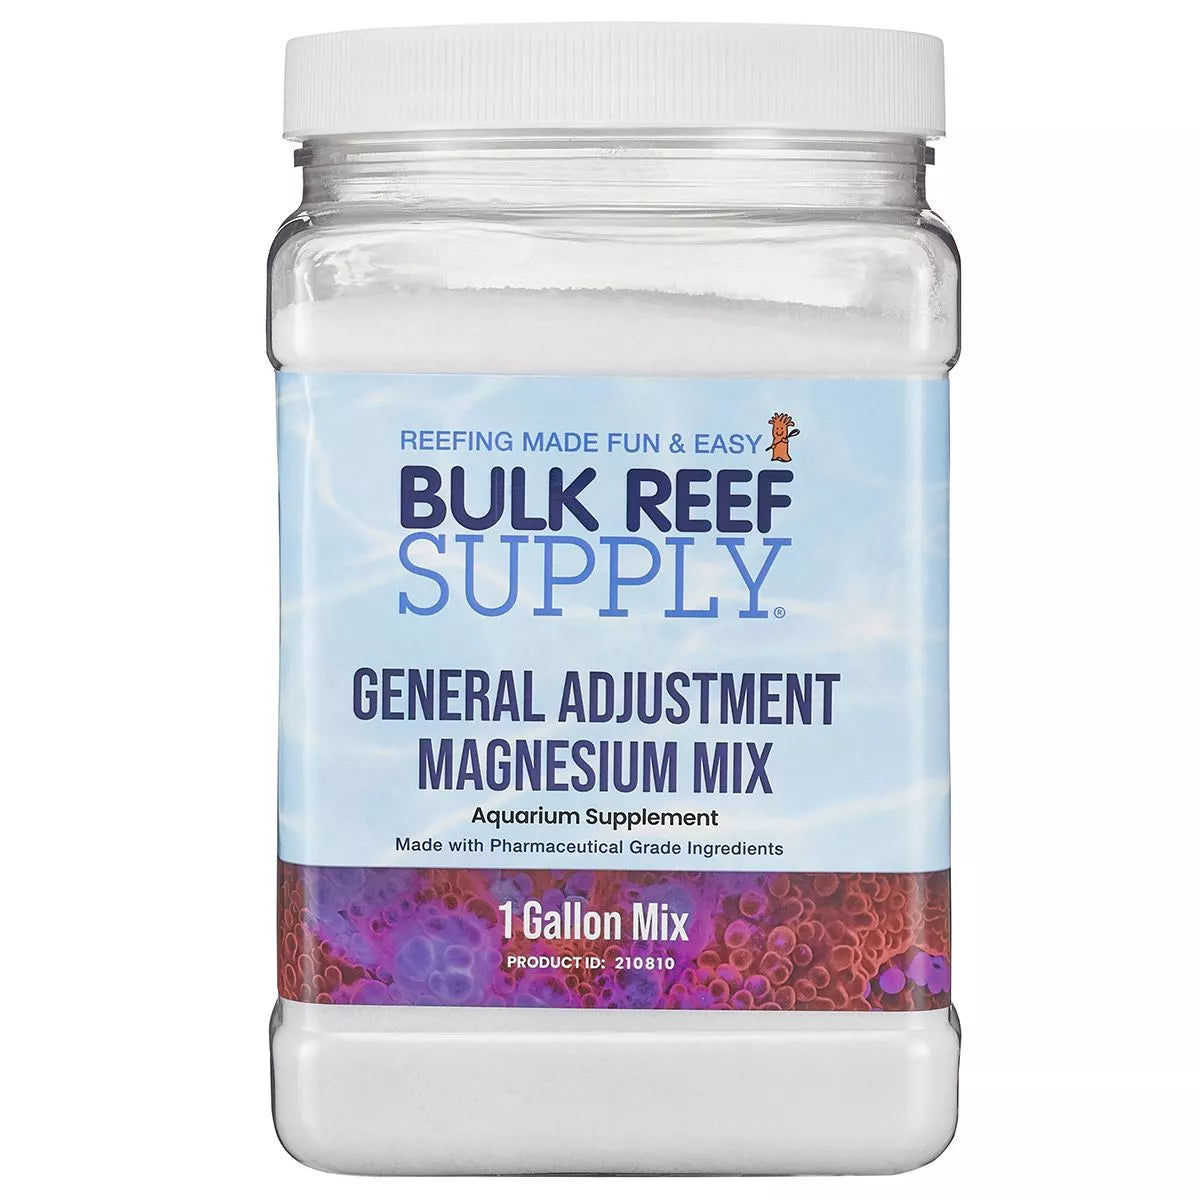 Magnesium Mix for General Adjustments